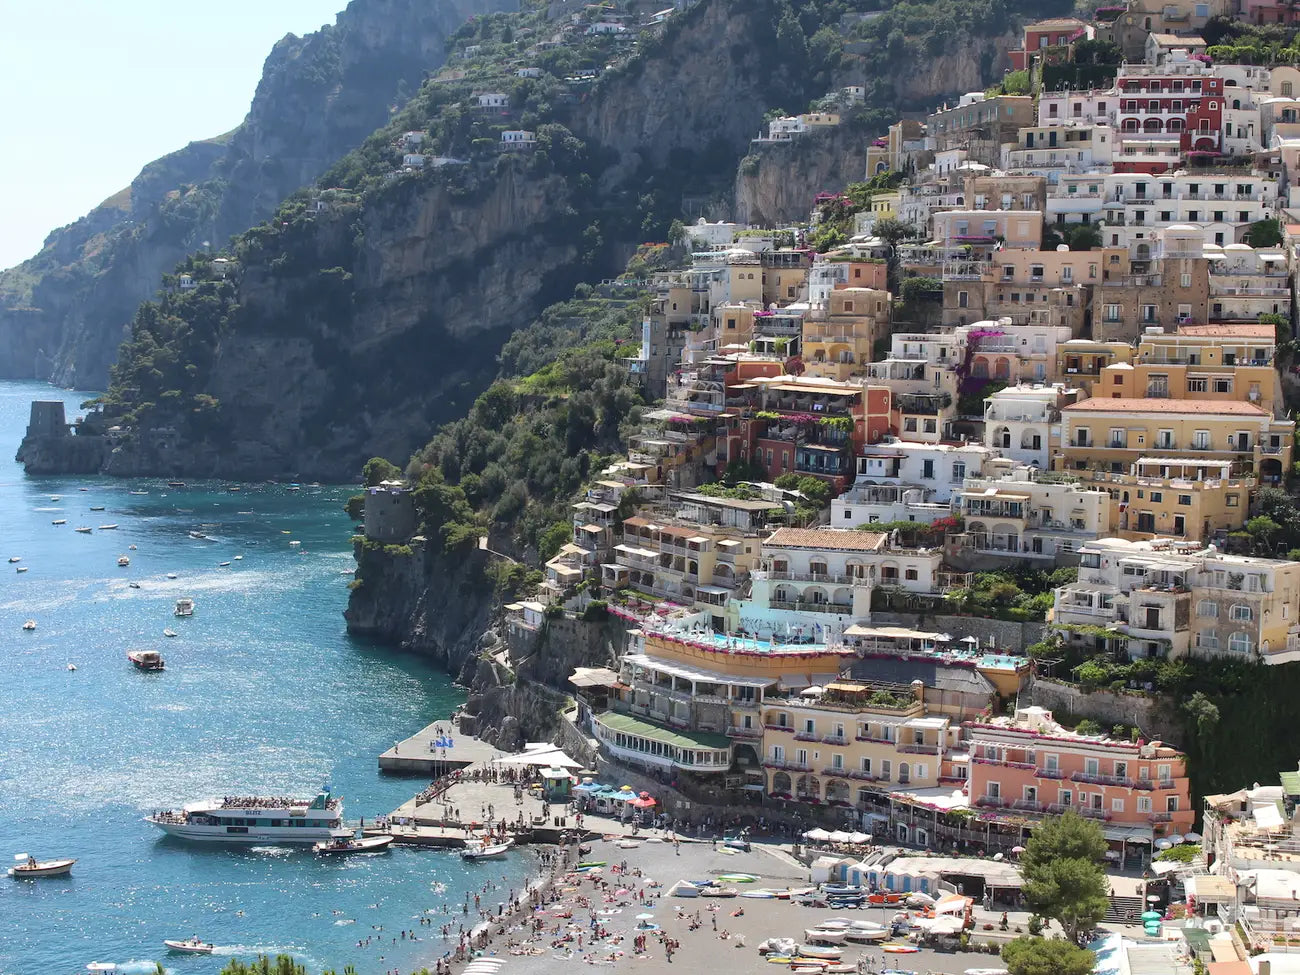 Photo of Positano in Italy - Euro Summer vacation destinations blog